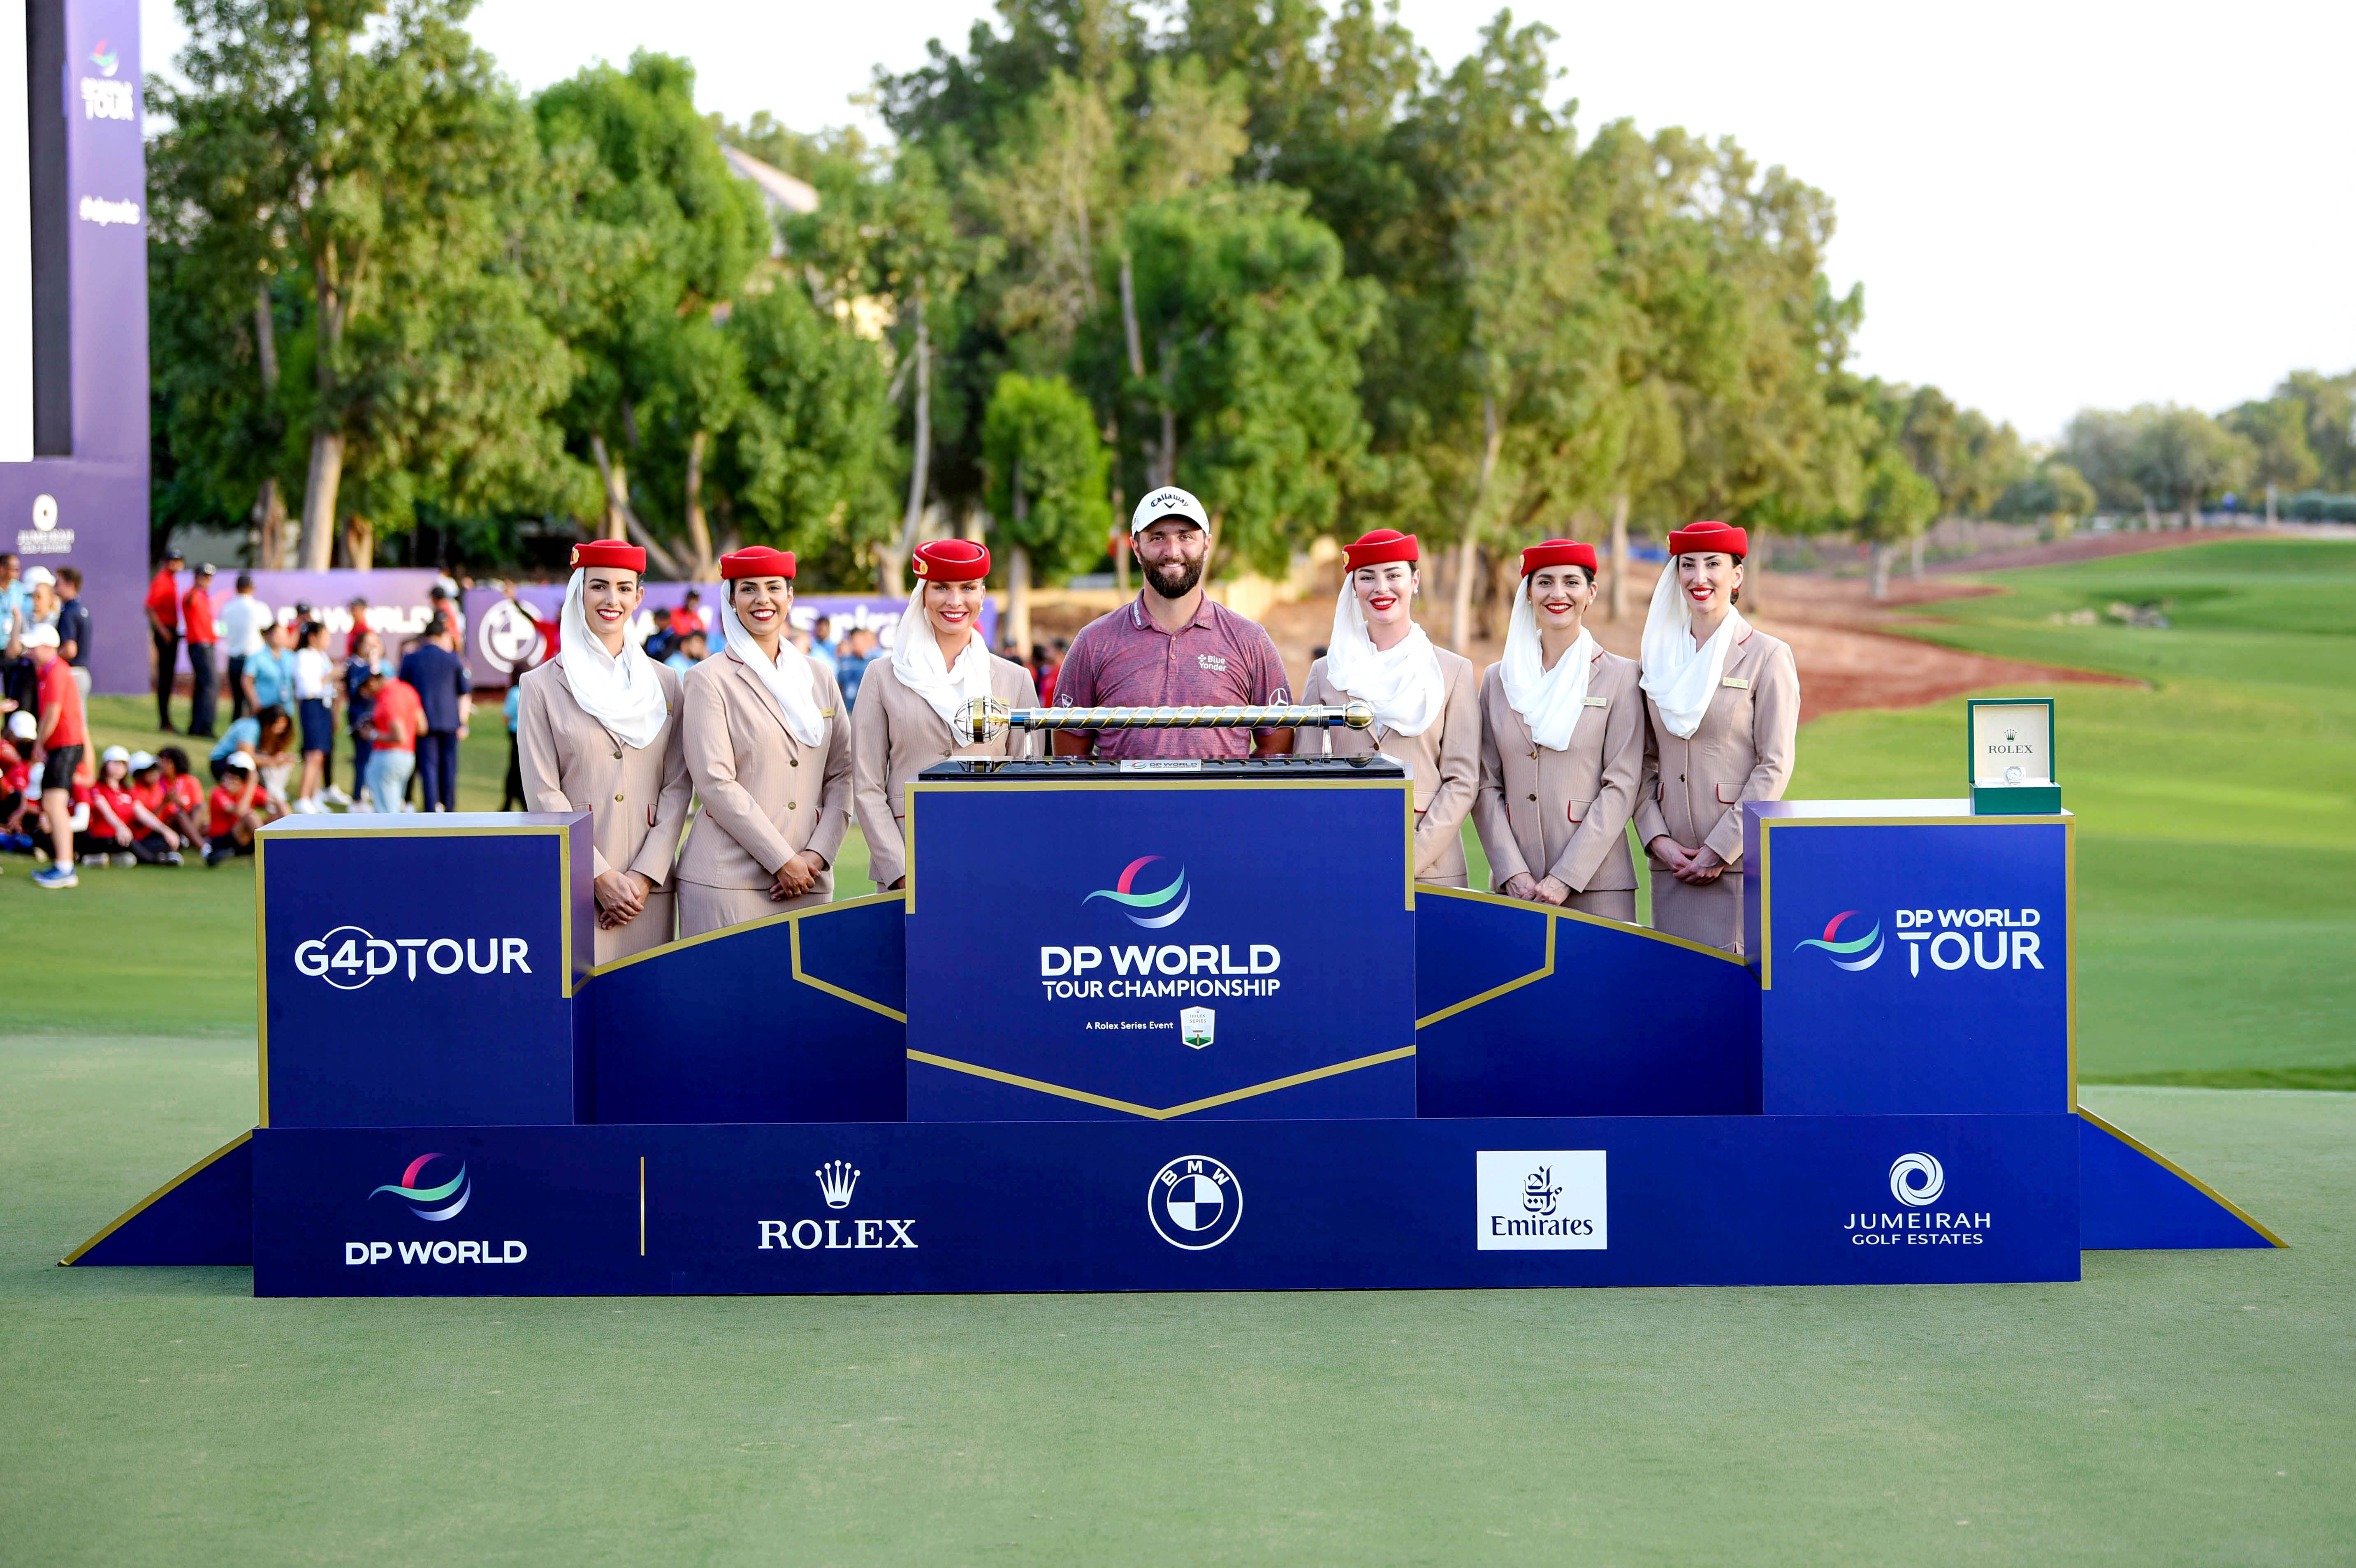 DP World Tour Championship And Emirates Extend Partnership Dubai Blog